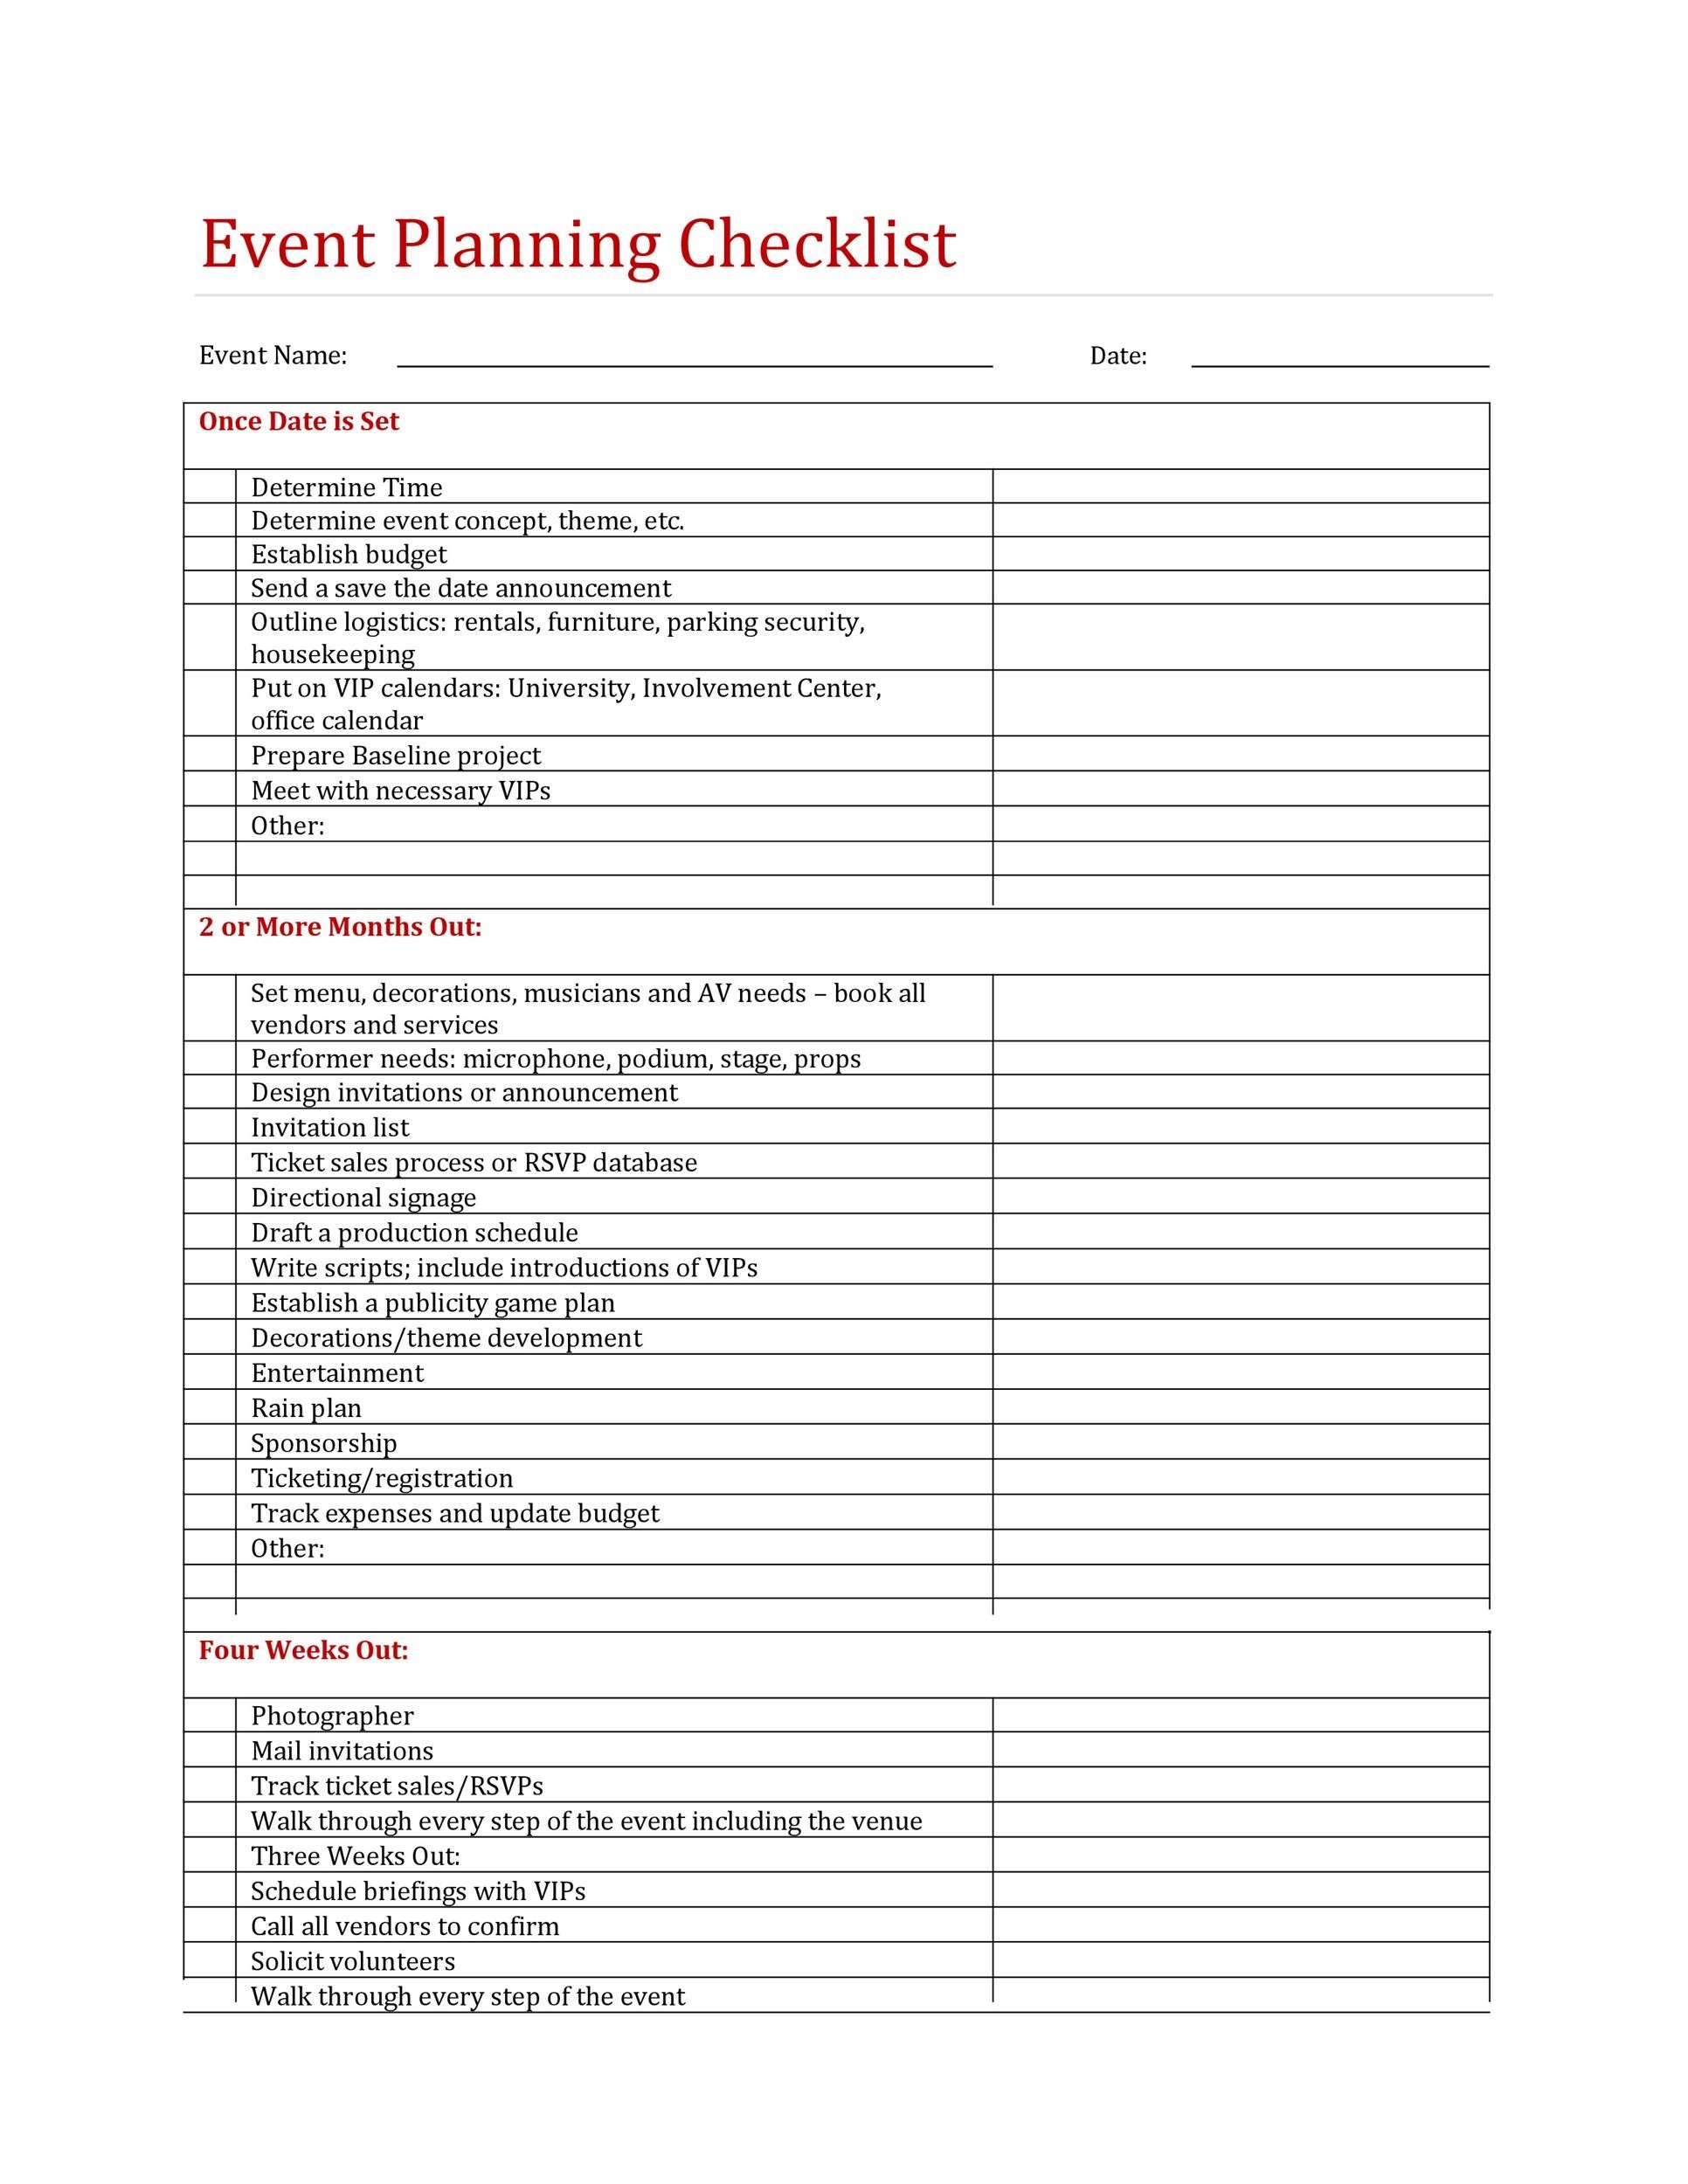 wedding-planning-checklist-pdf-clearance-buy-save-67-jlcatj-gob-mx